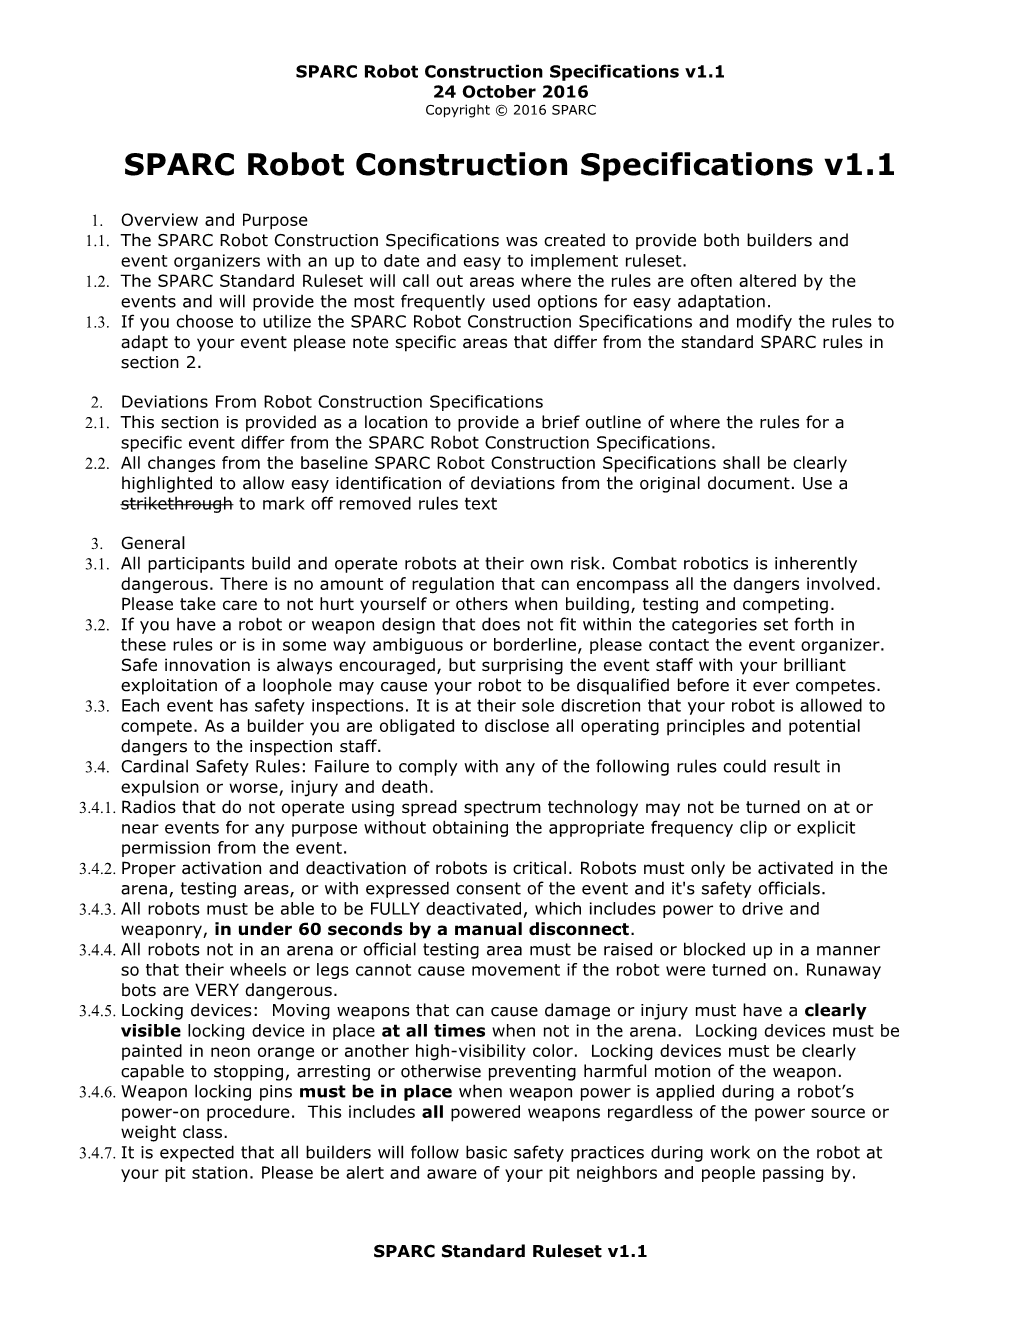 SPARC Robot Construction Specifications V1.1